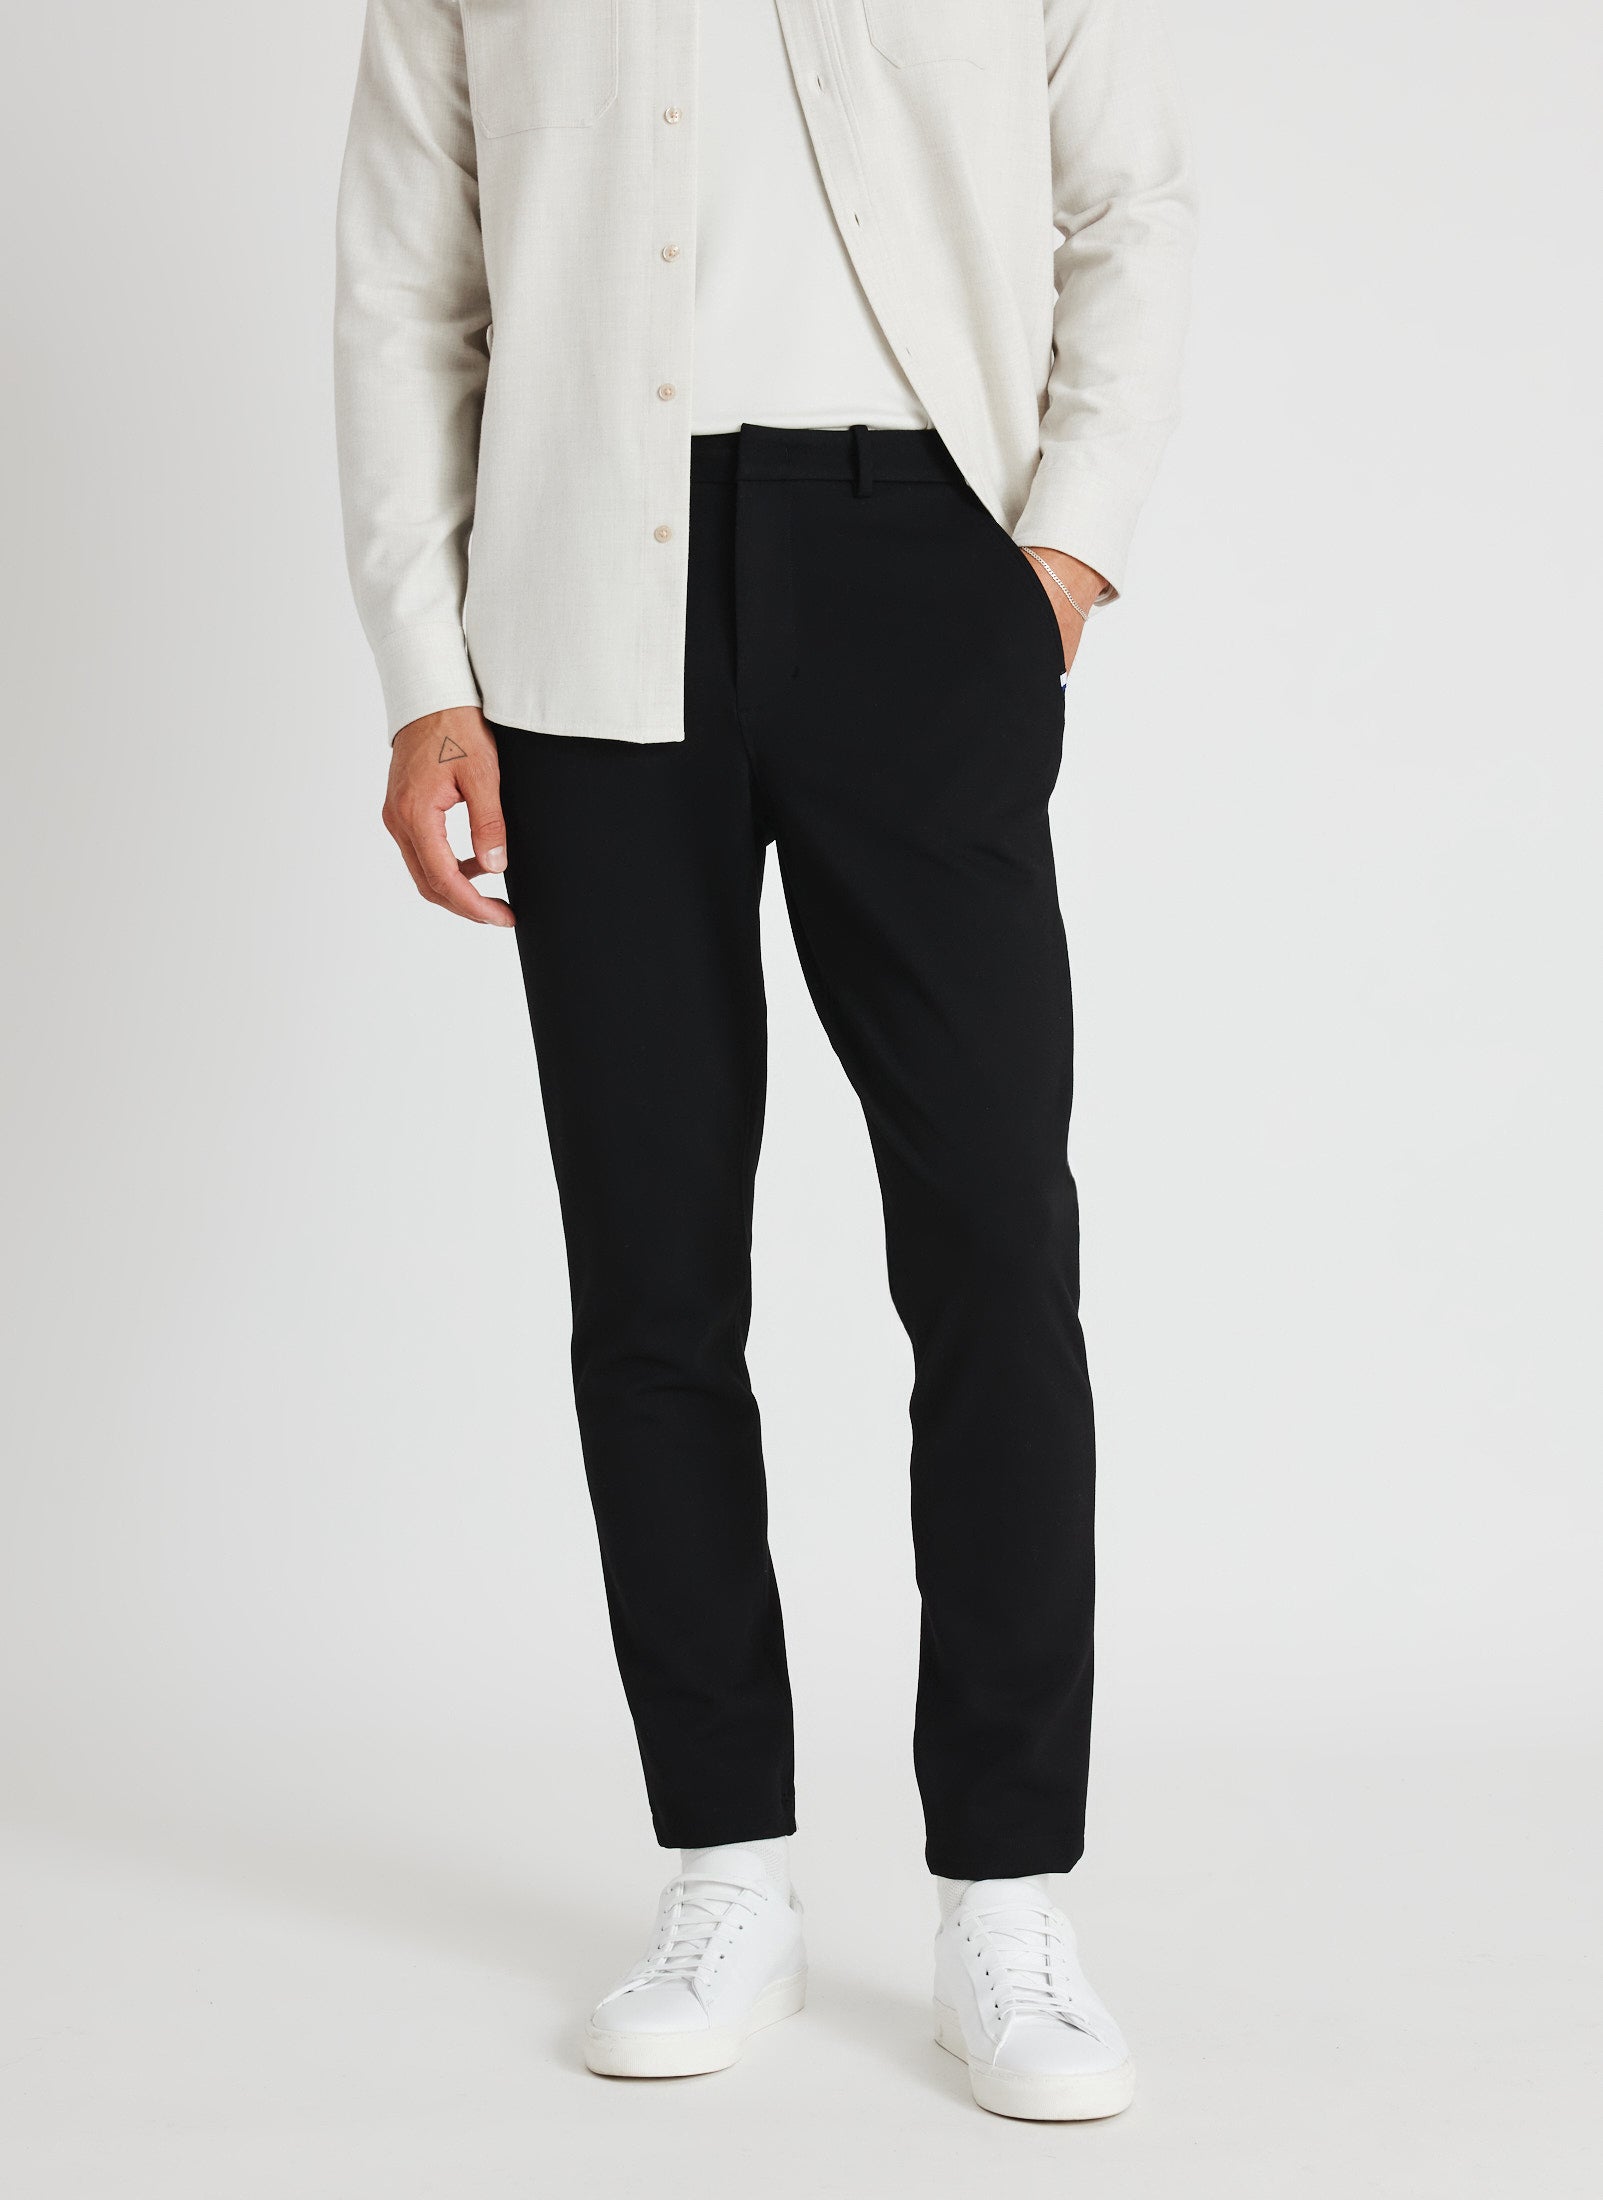 Modern Wool Pants - Inseam Length 28 - 34